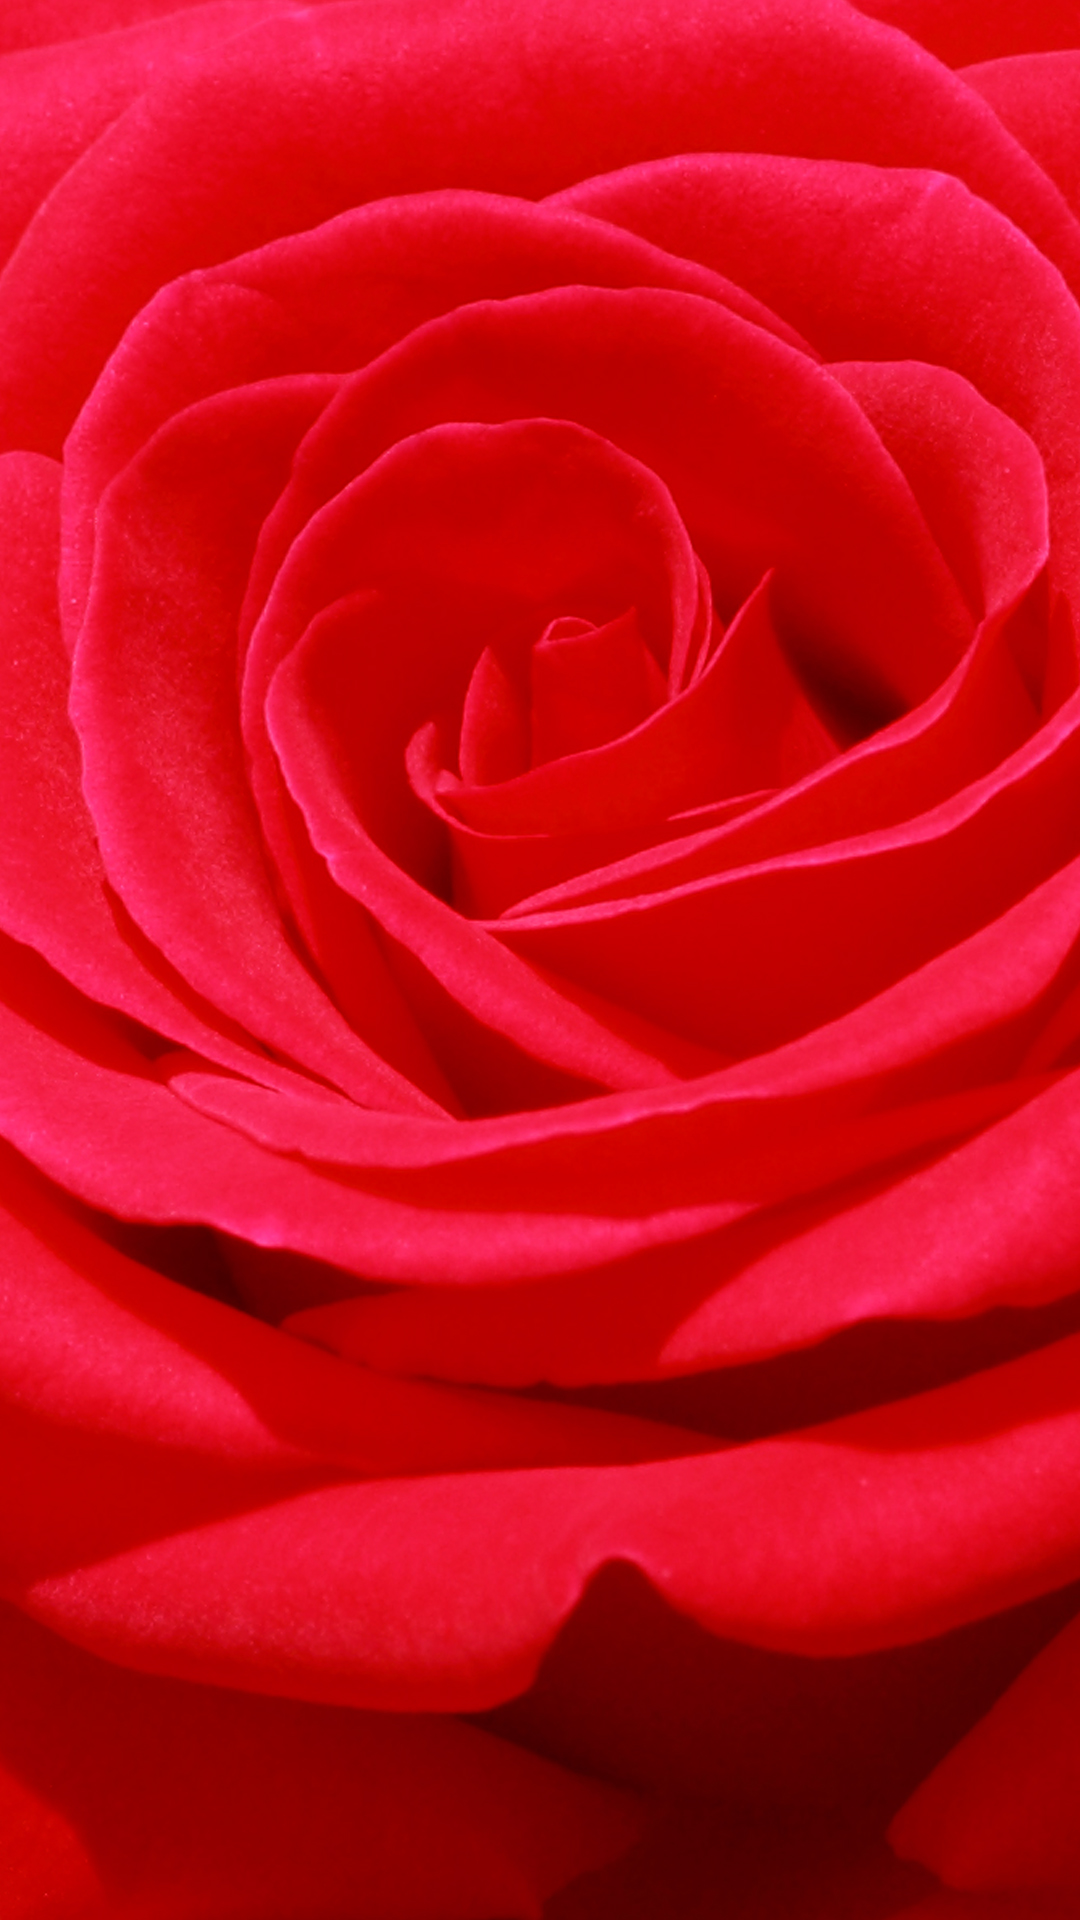 Rose 深紅の薔薇 Pc スマートフォンの壁紙 スマートマイズ